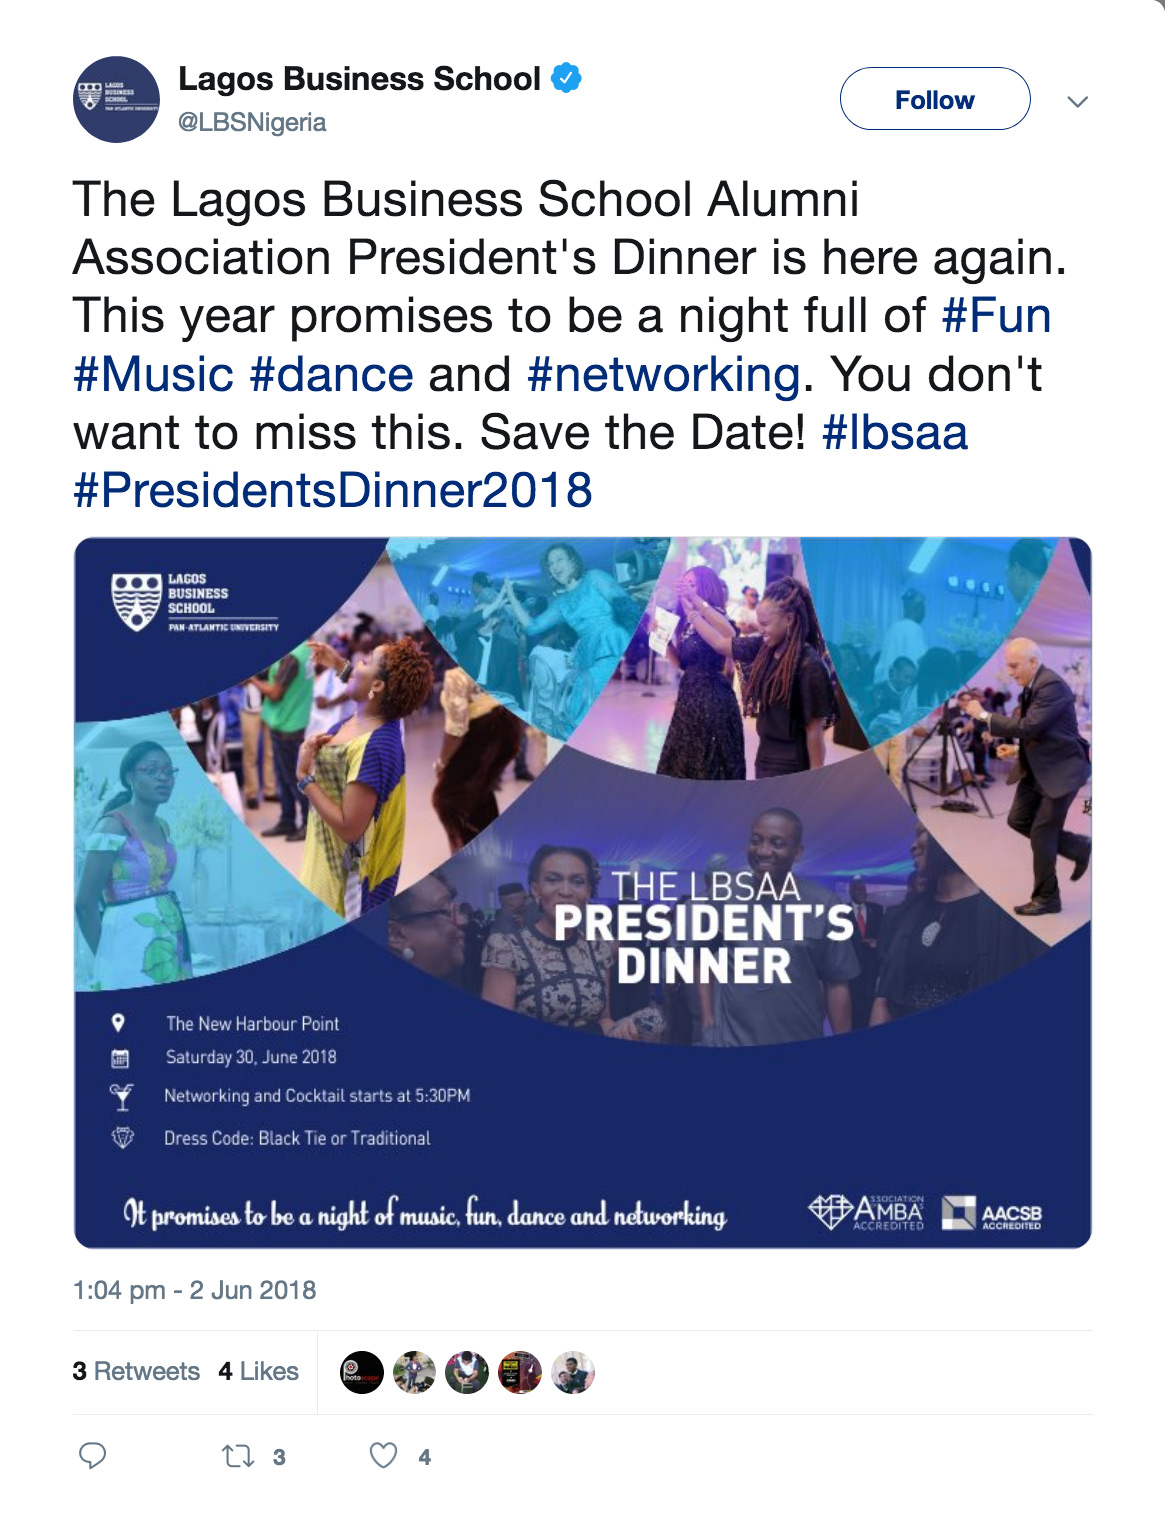 Lagos Business School on Twitter